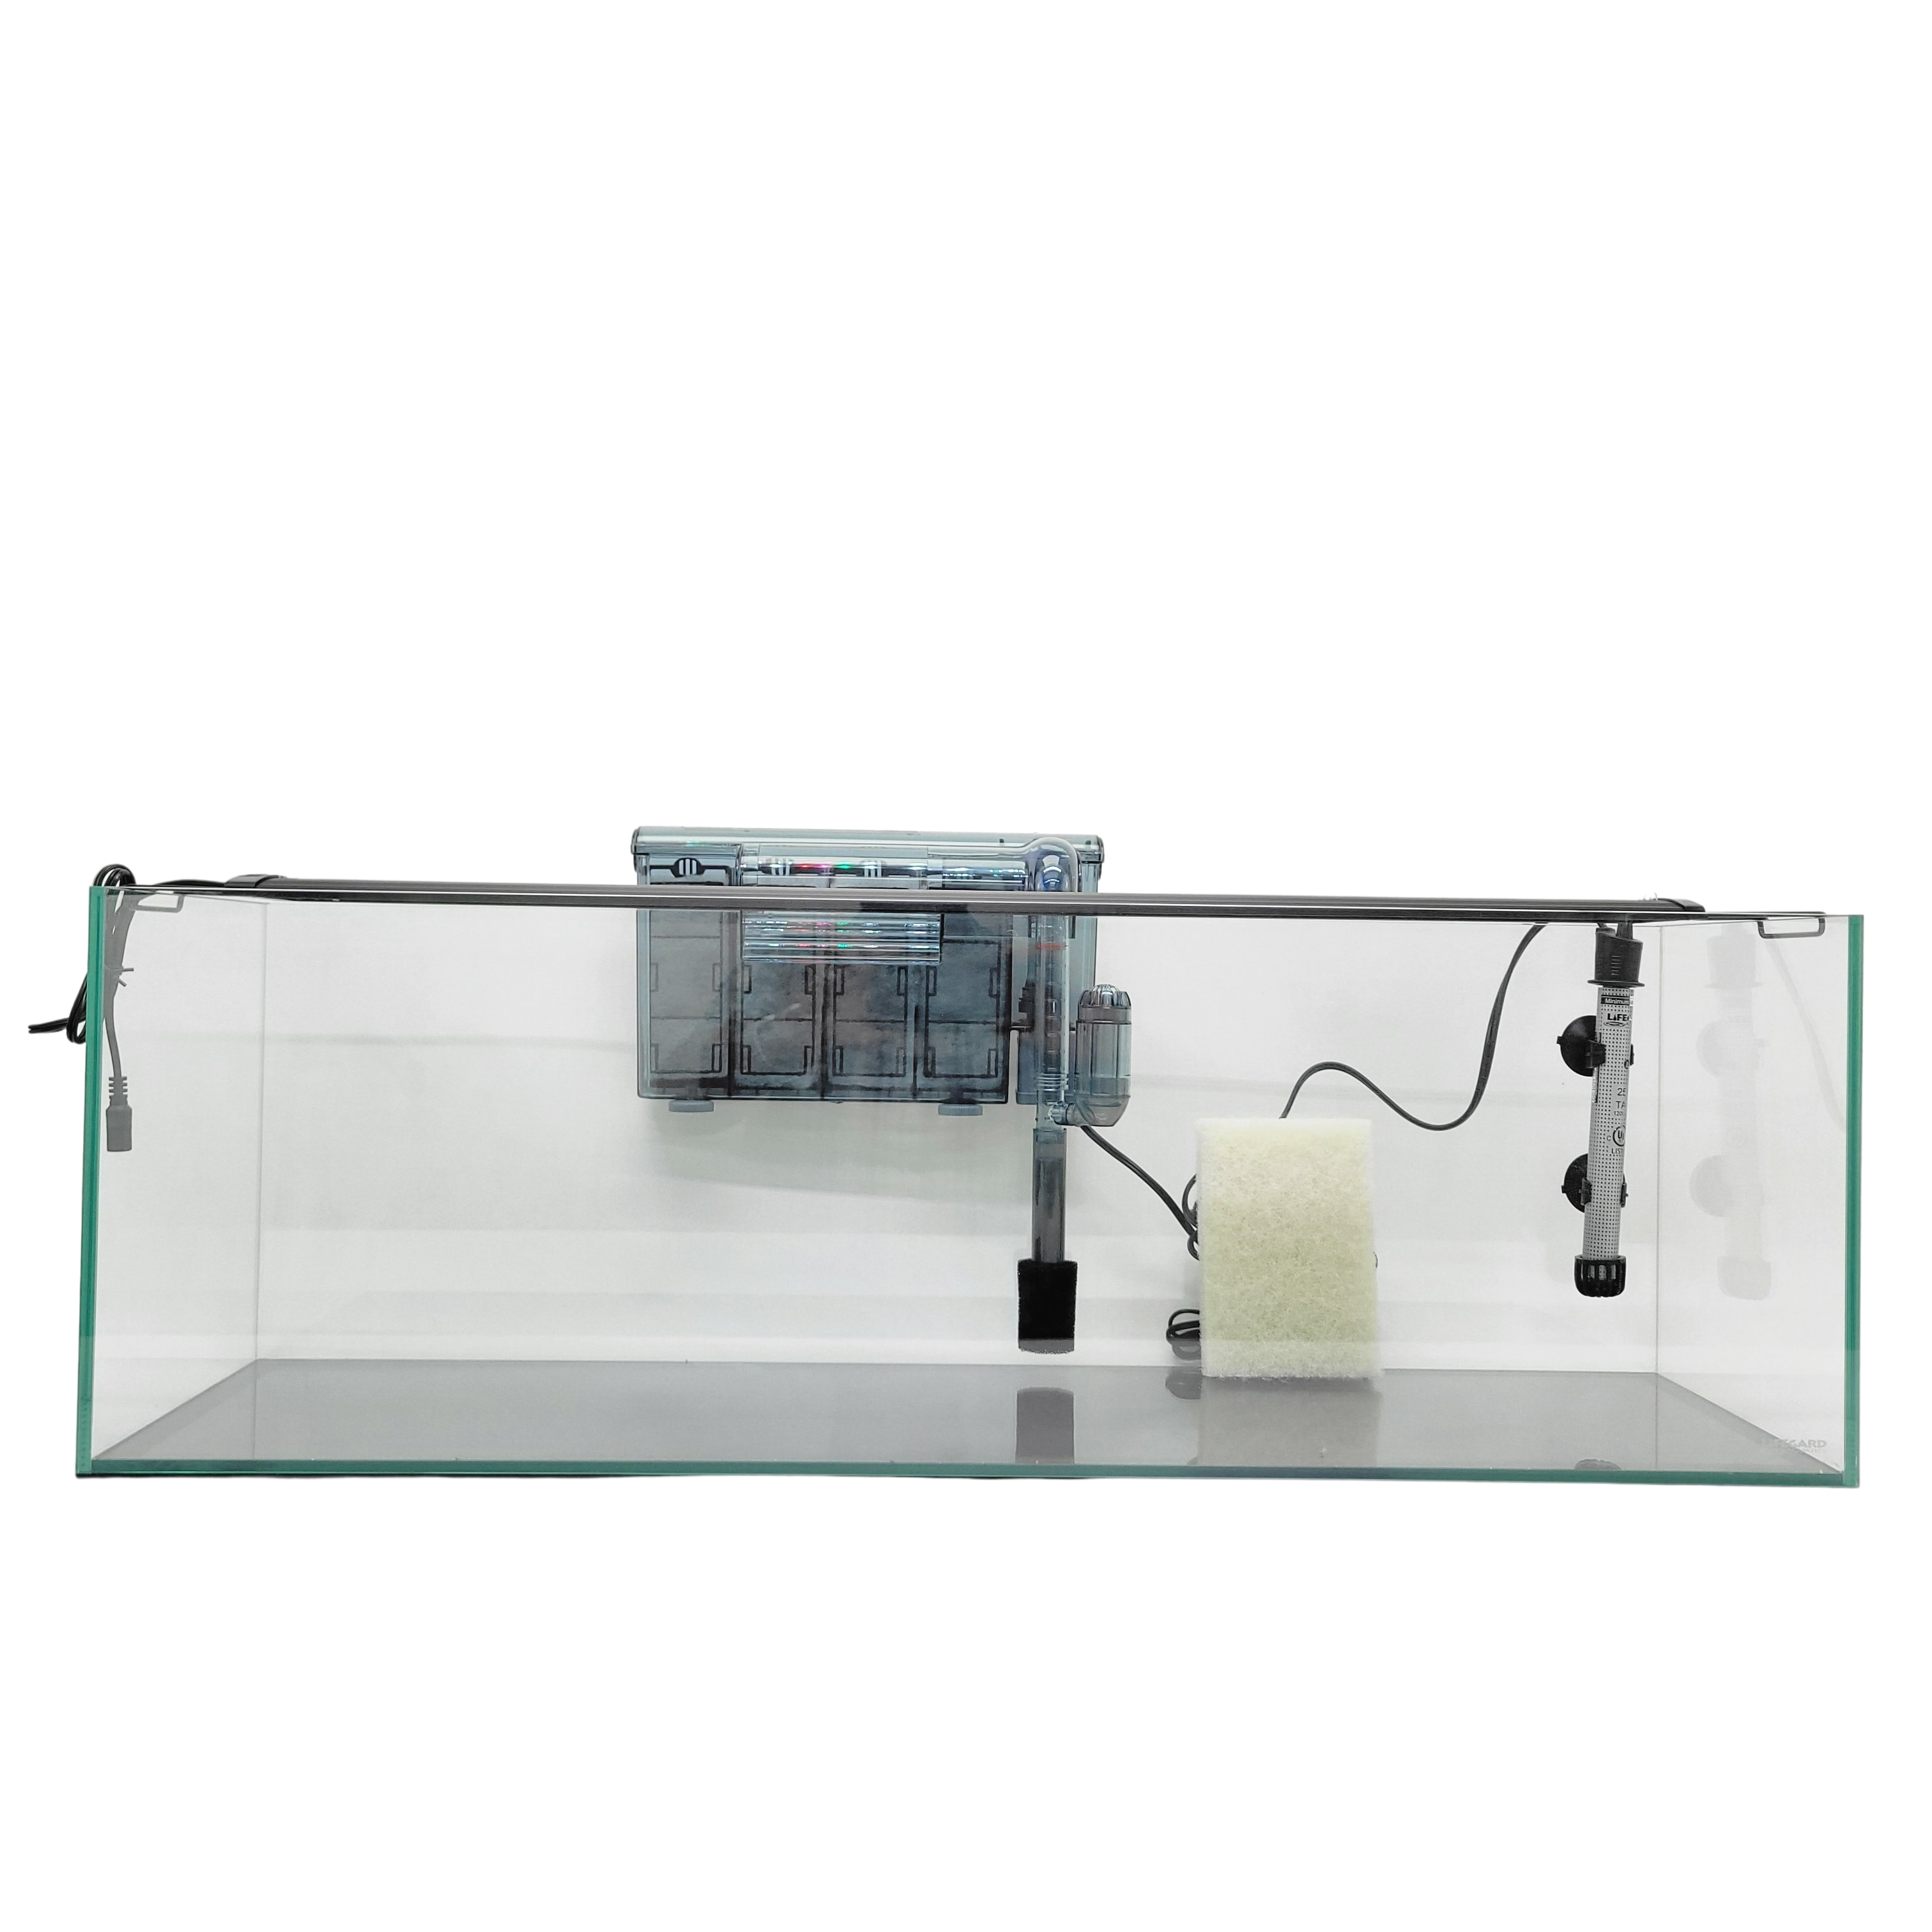 22 Gallon Ultra Clear Rimless Aquarium Kit by Lifegard Aquatics